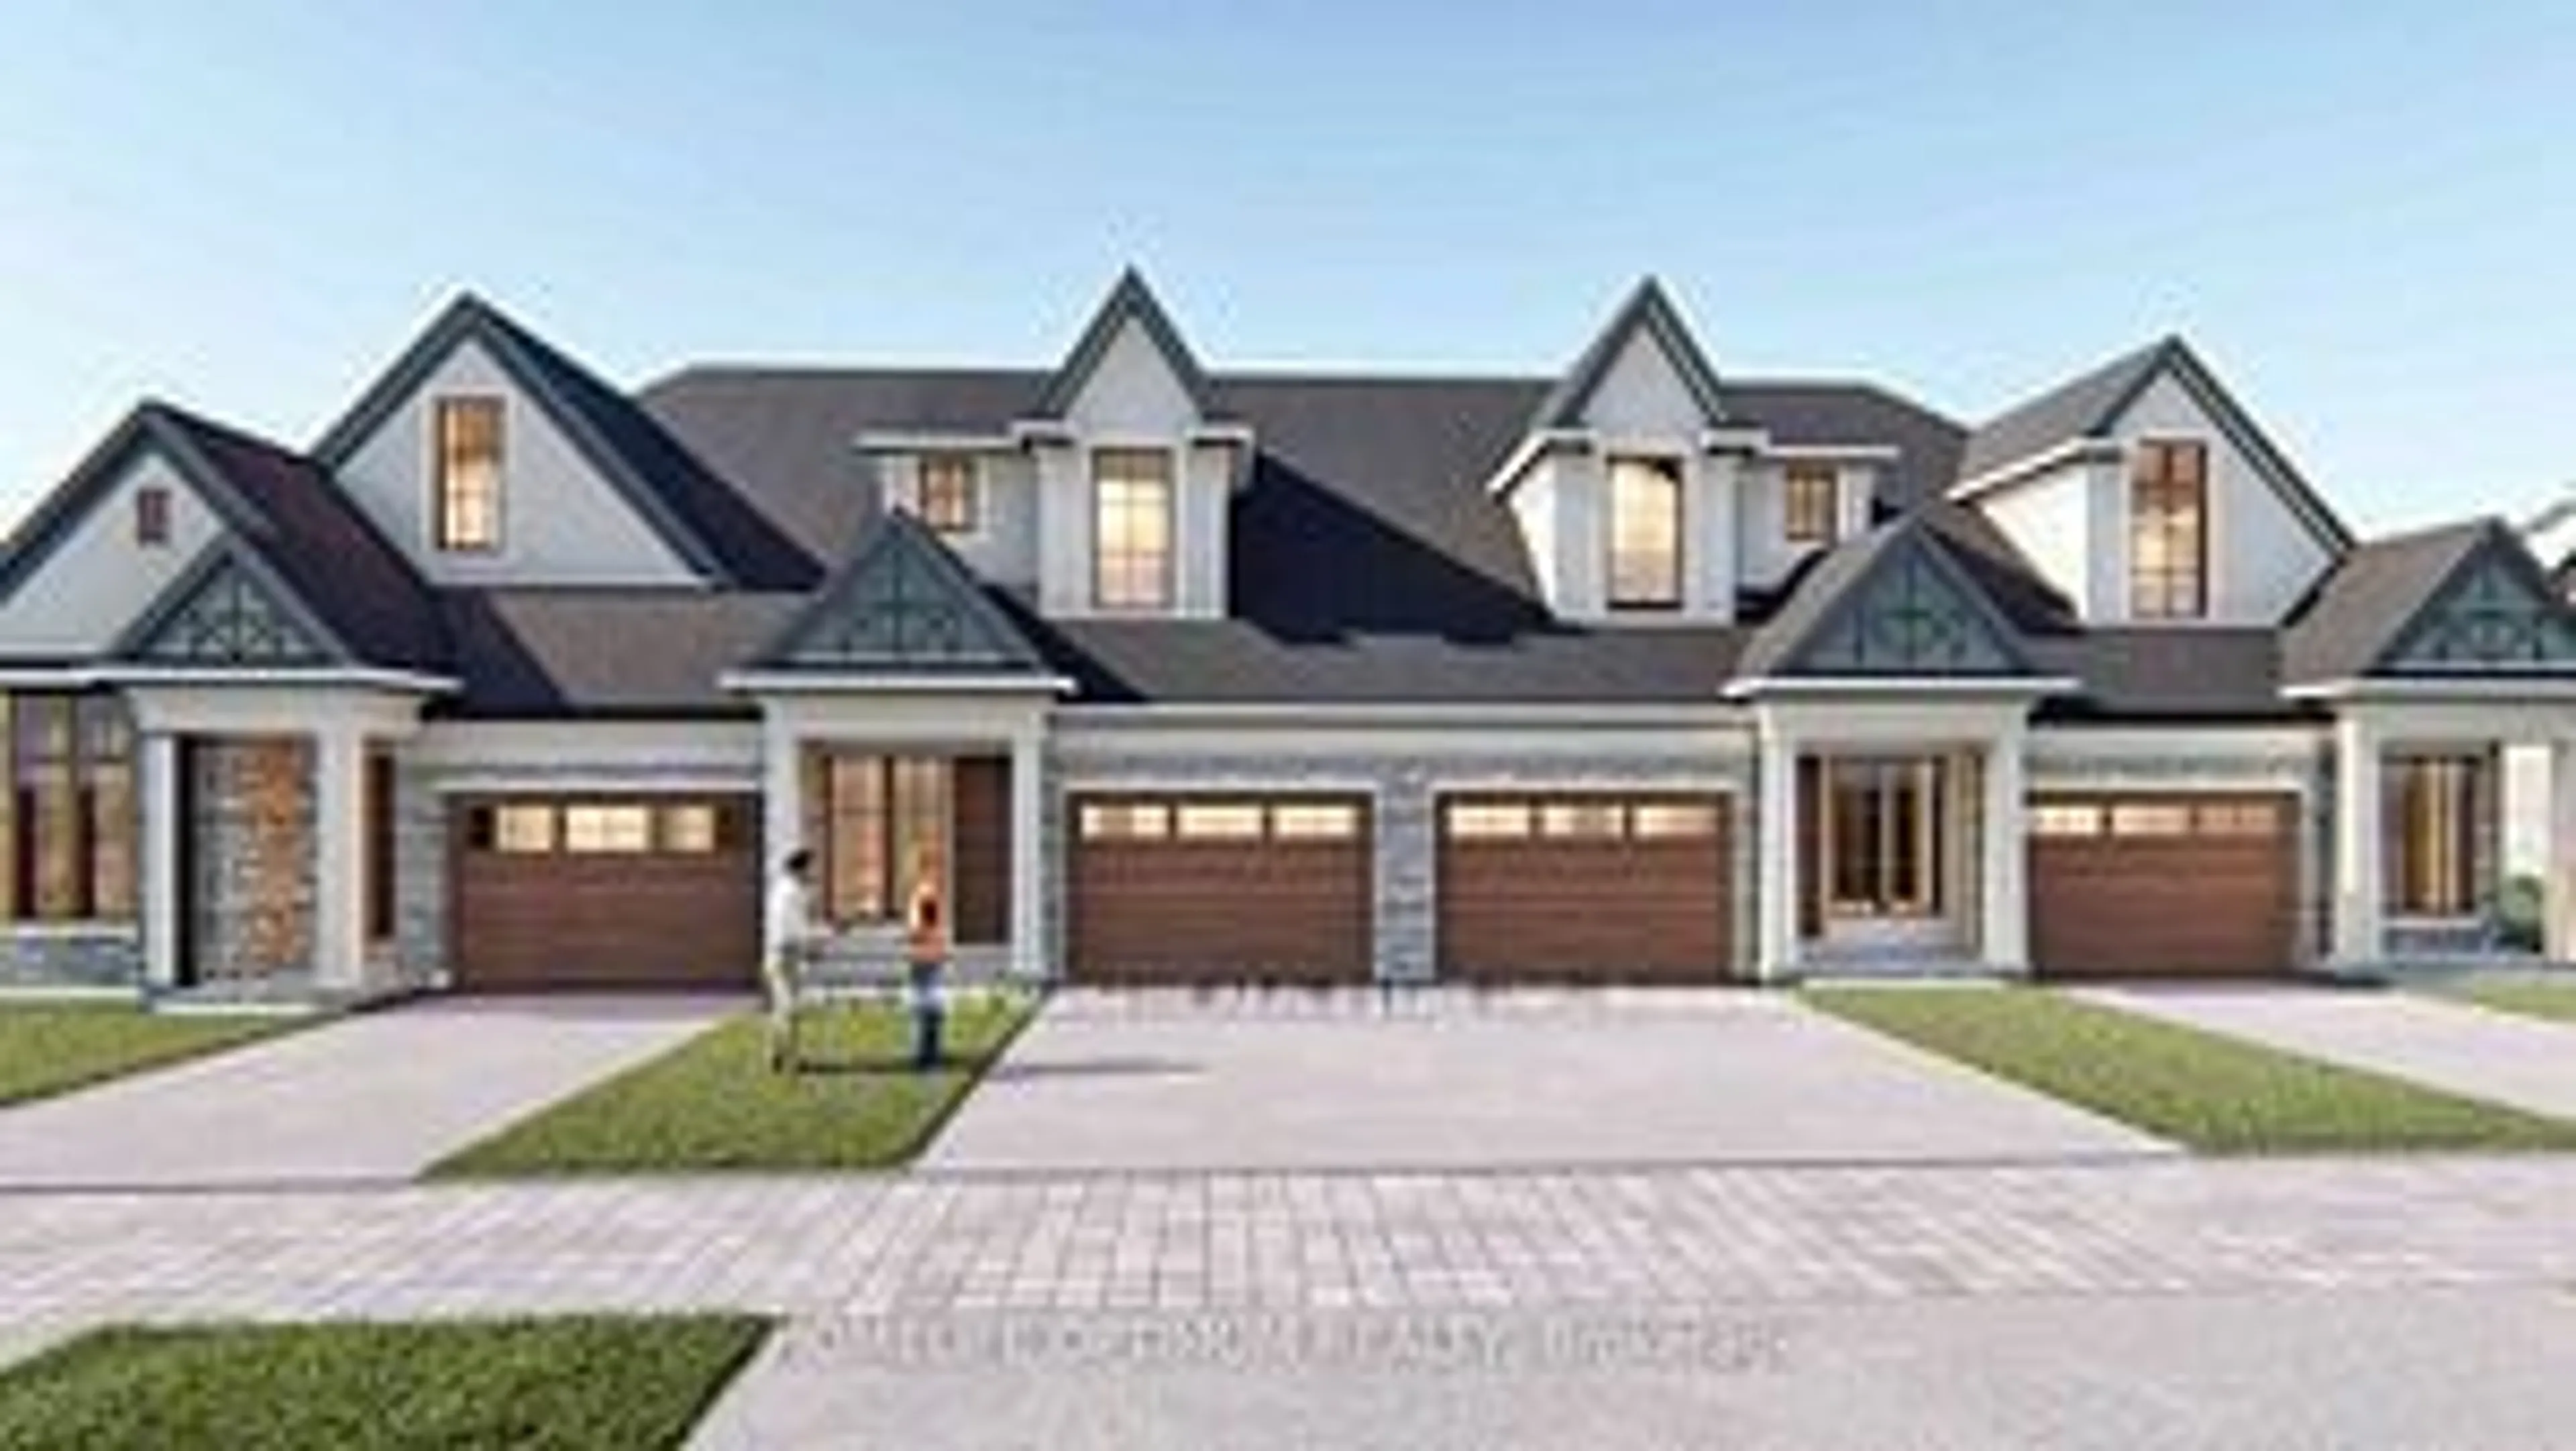 Home with brick exterior material for 2700 Mewburn Rd #6, Niagara Falls Ontario L2E 6S4